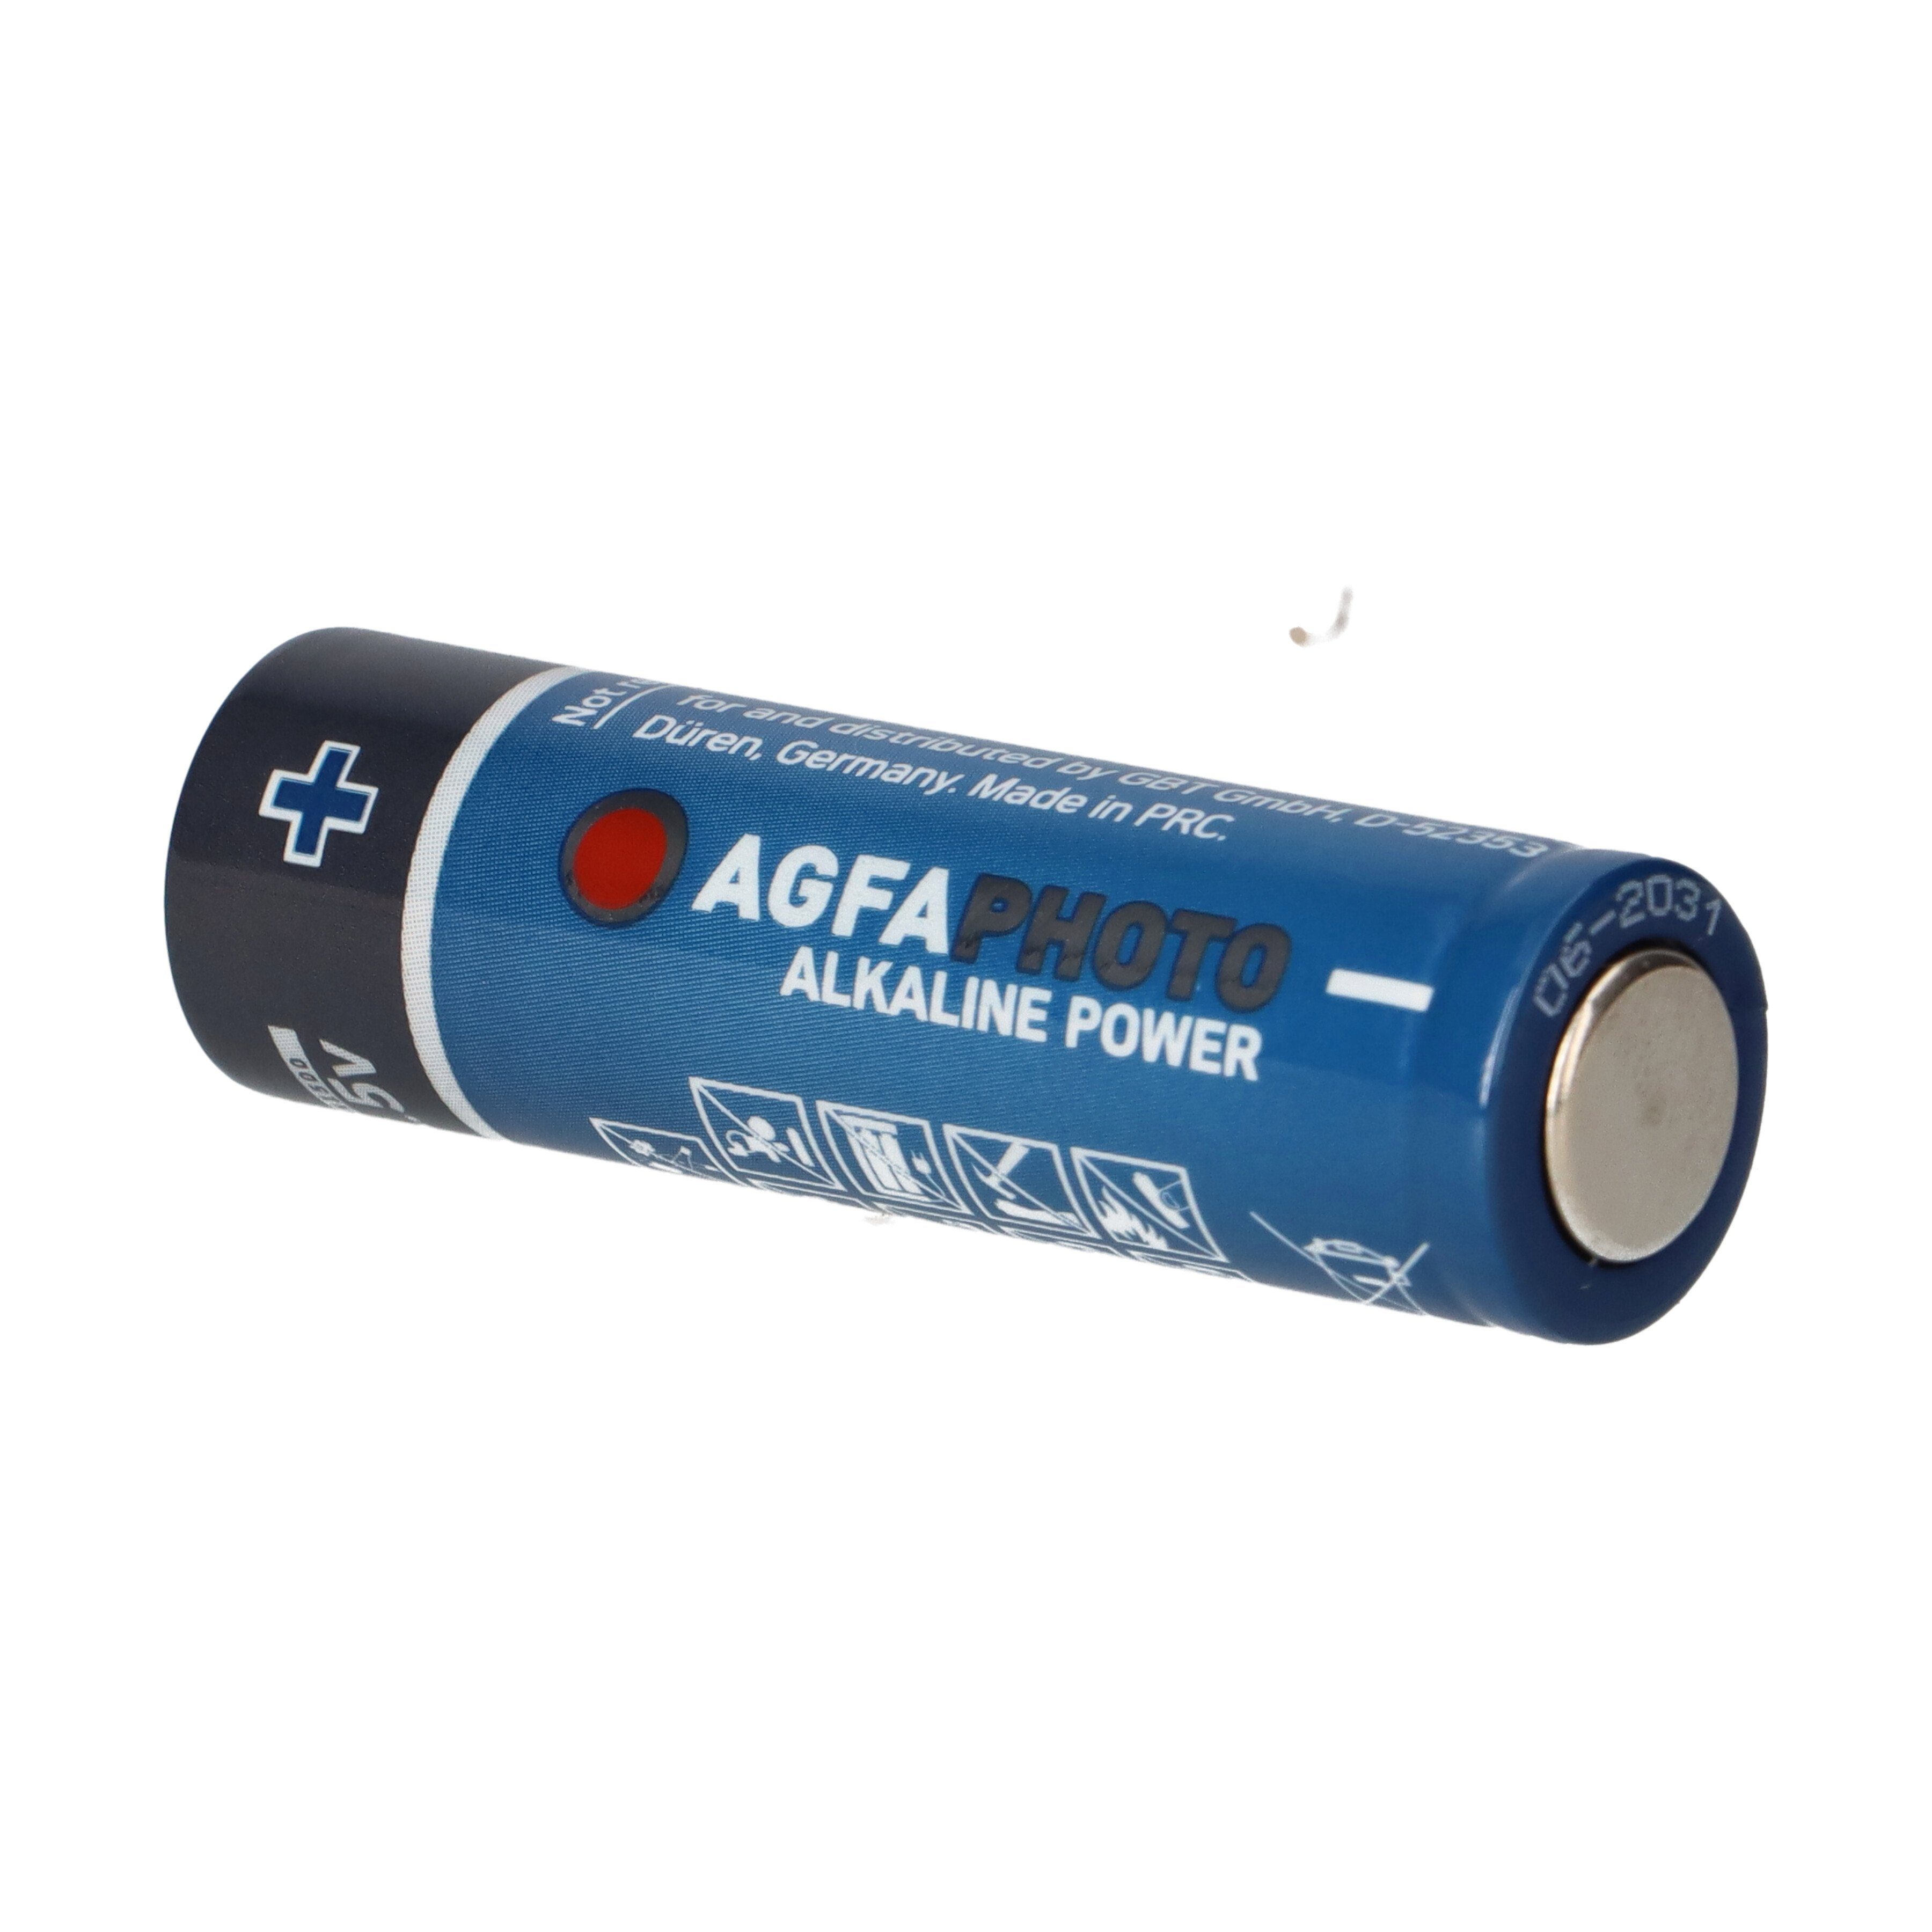 AgfaPhoto AGFAPHOTO AA 24 Mignon 1.5V Stück LR06 Alkaline Batterie Batterie